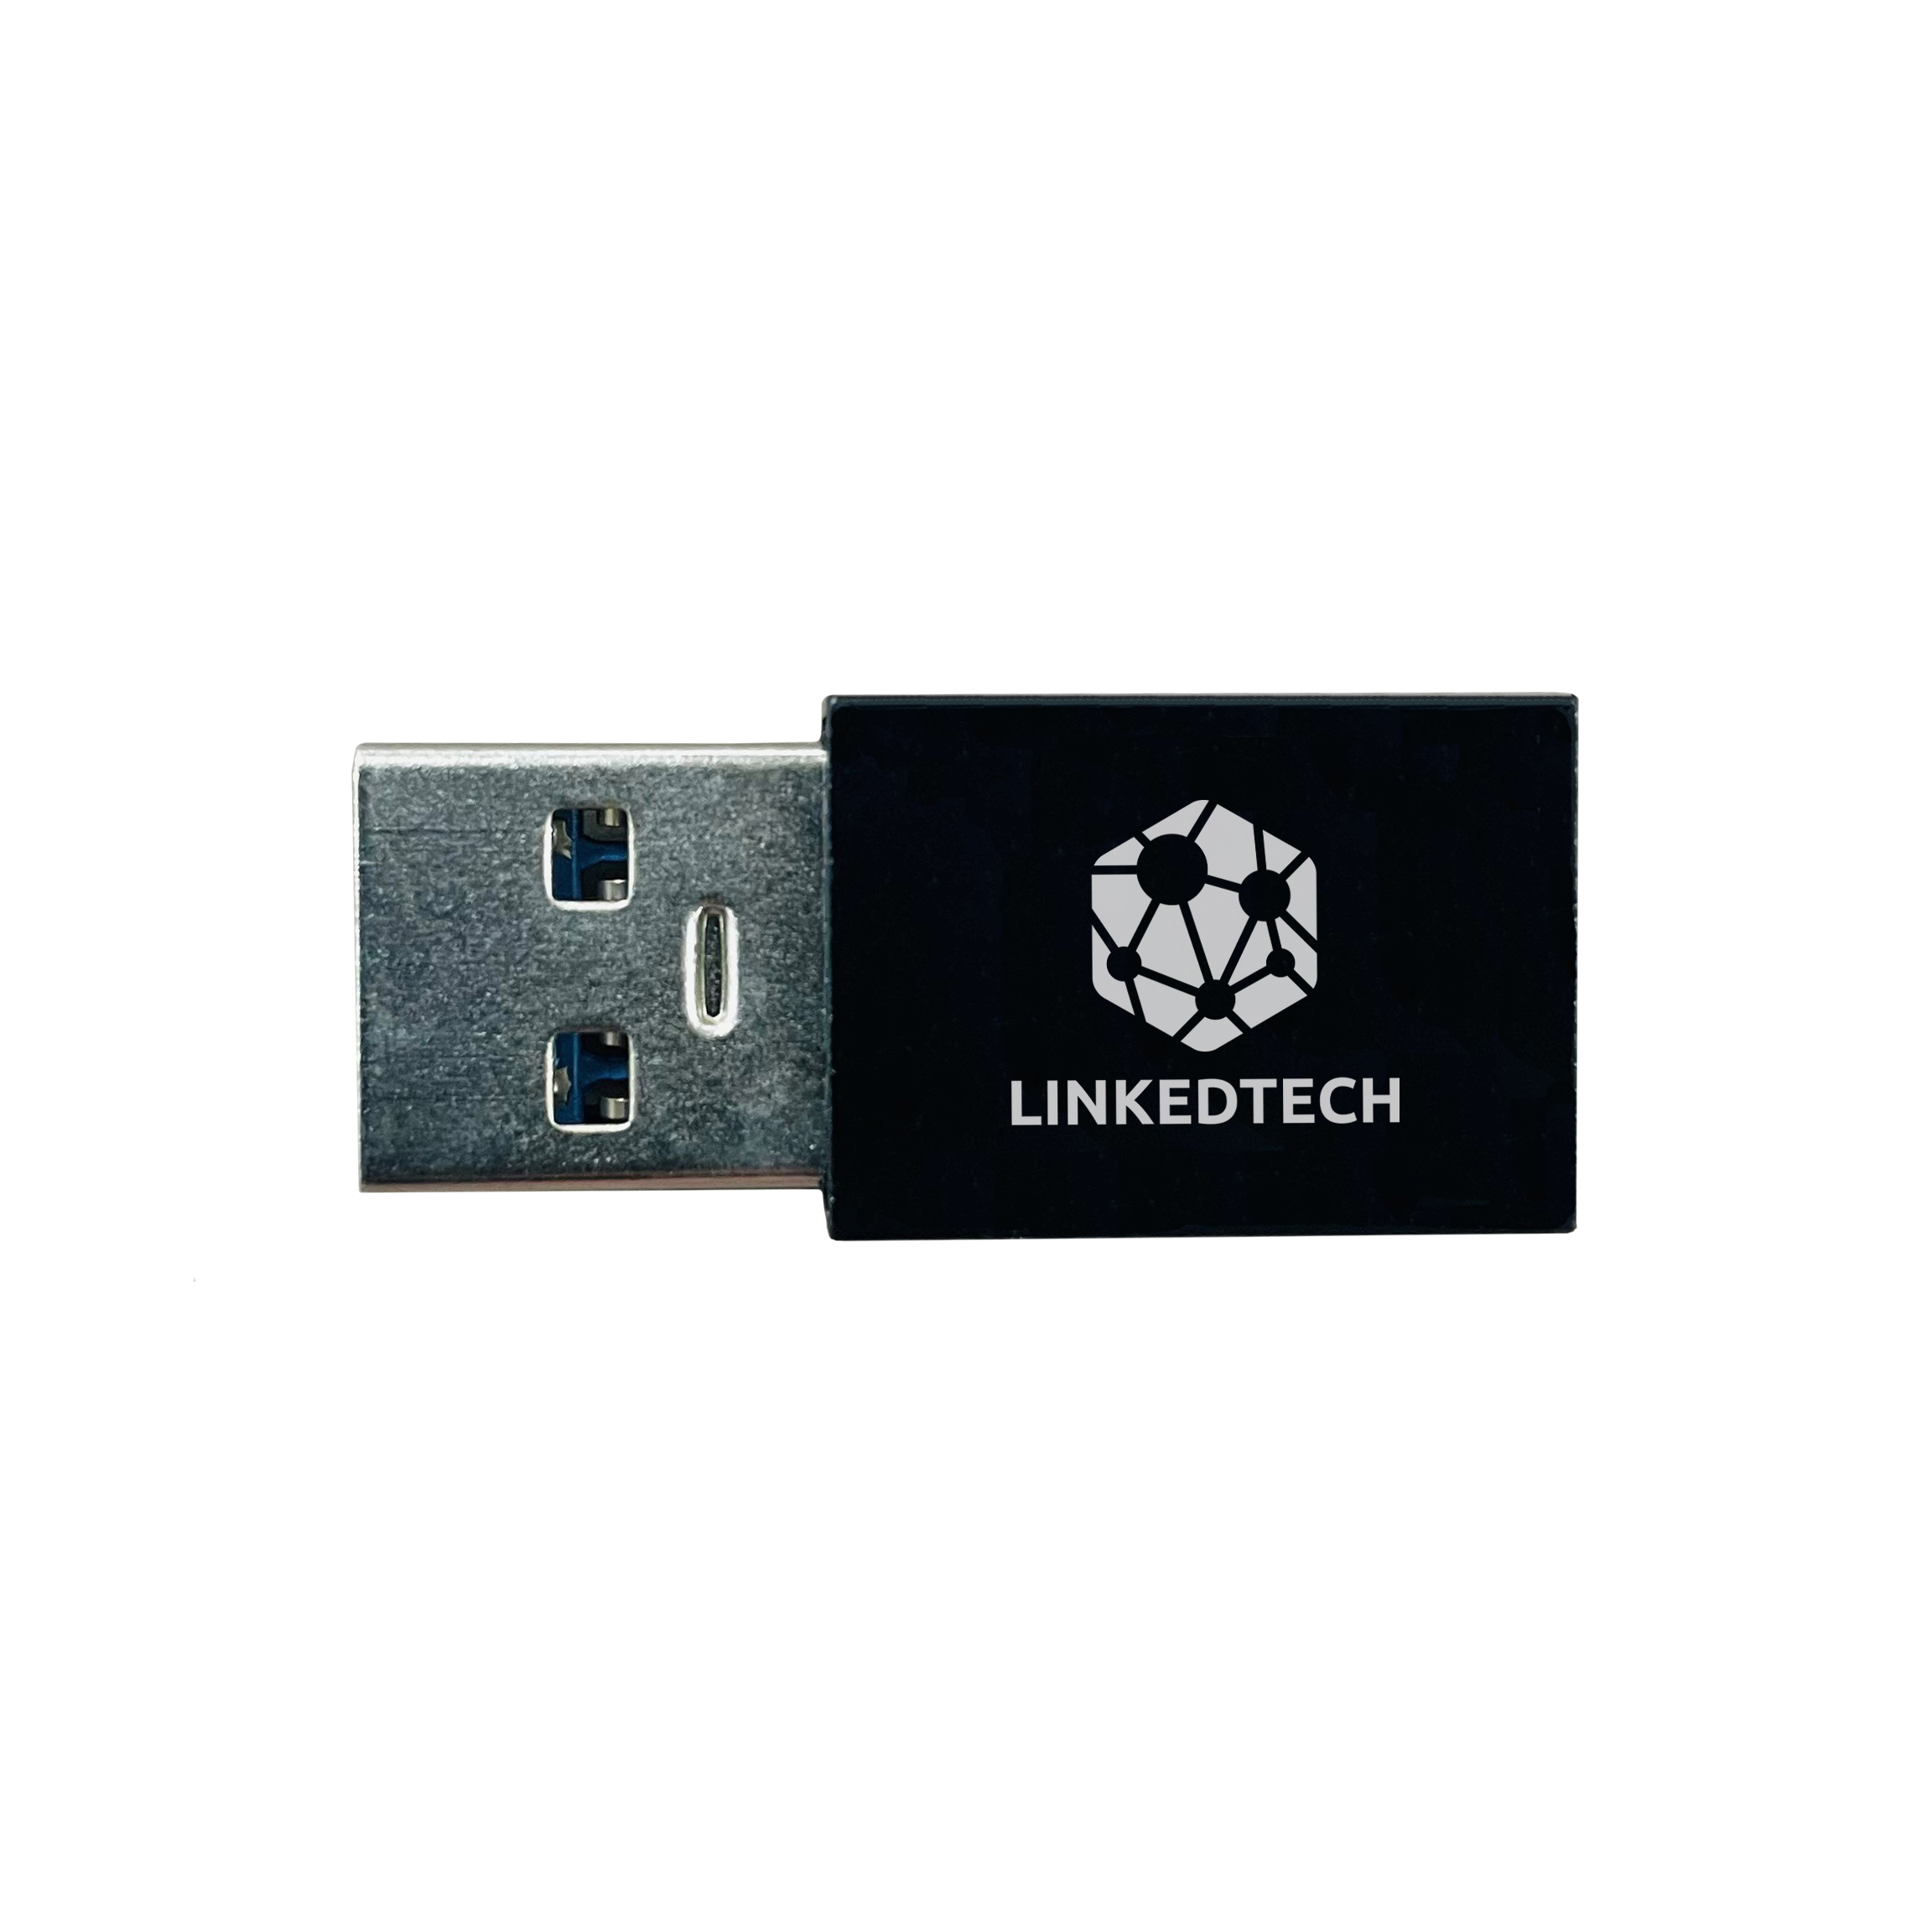 USB to USB-C Adapter